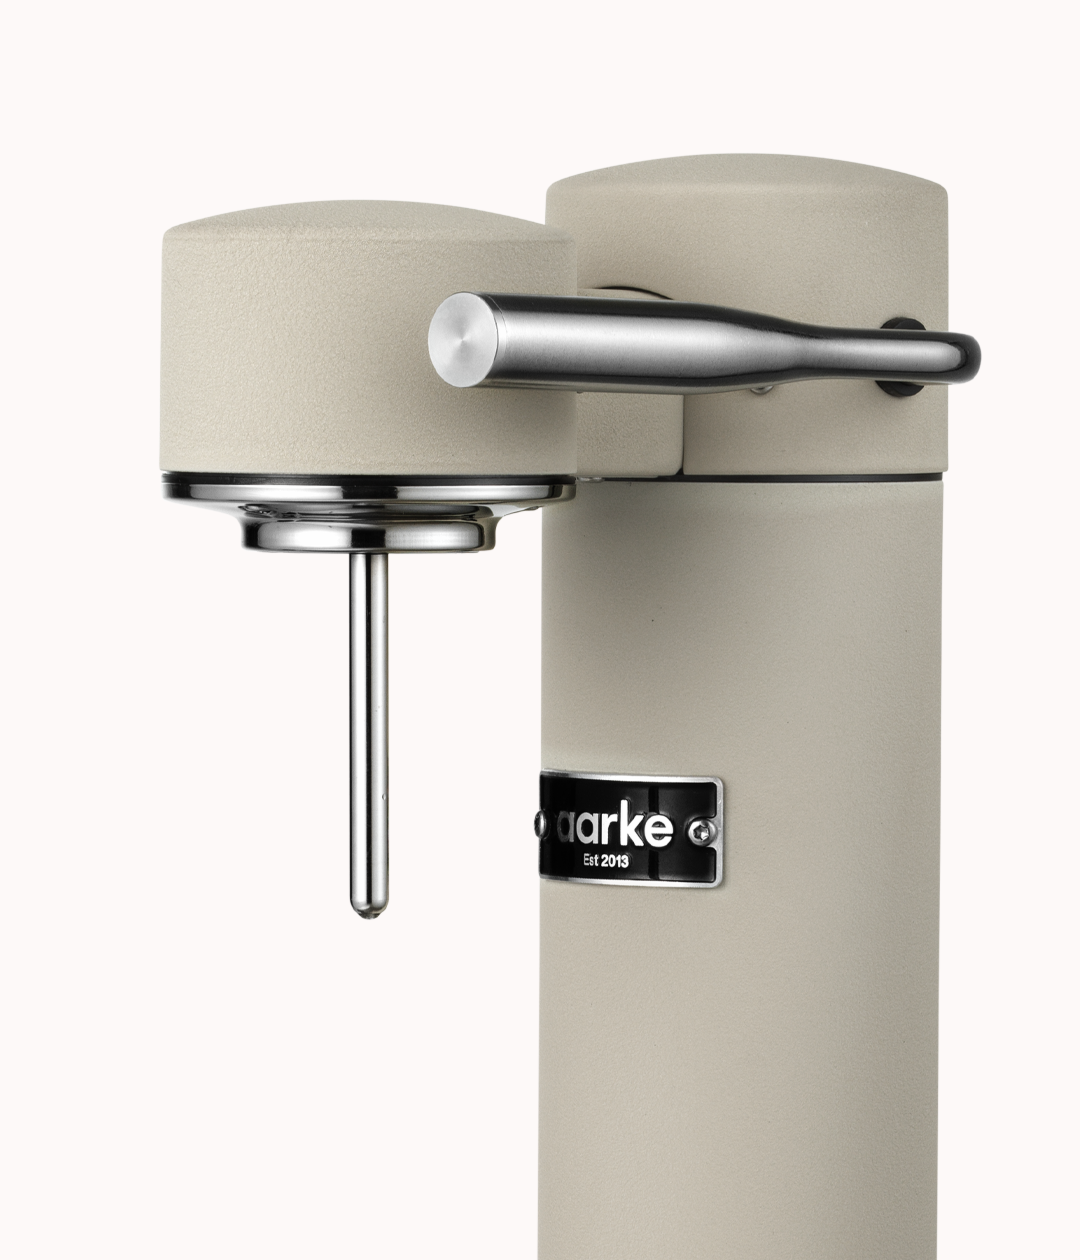  aarke - Carbonator III Premium Carbonator-Sparkling